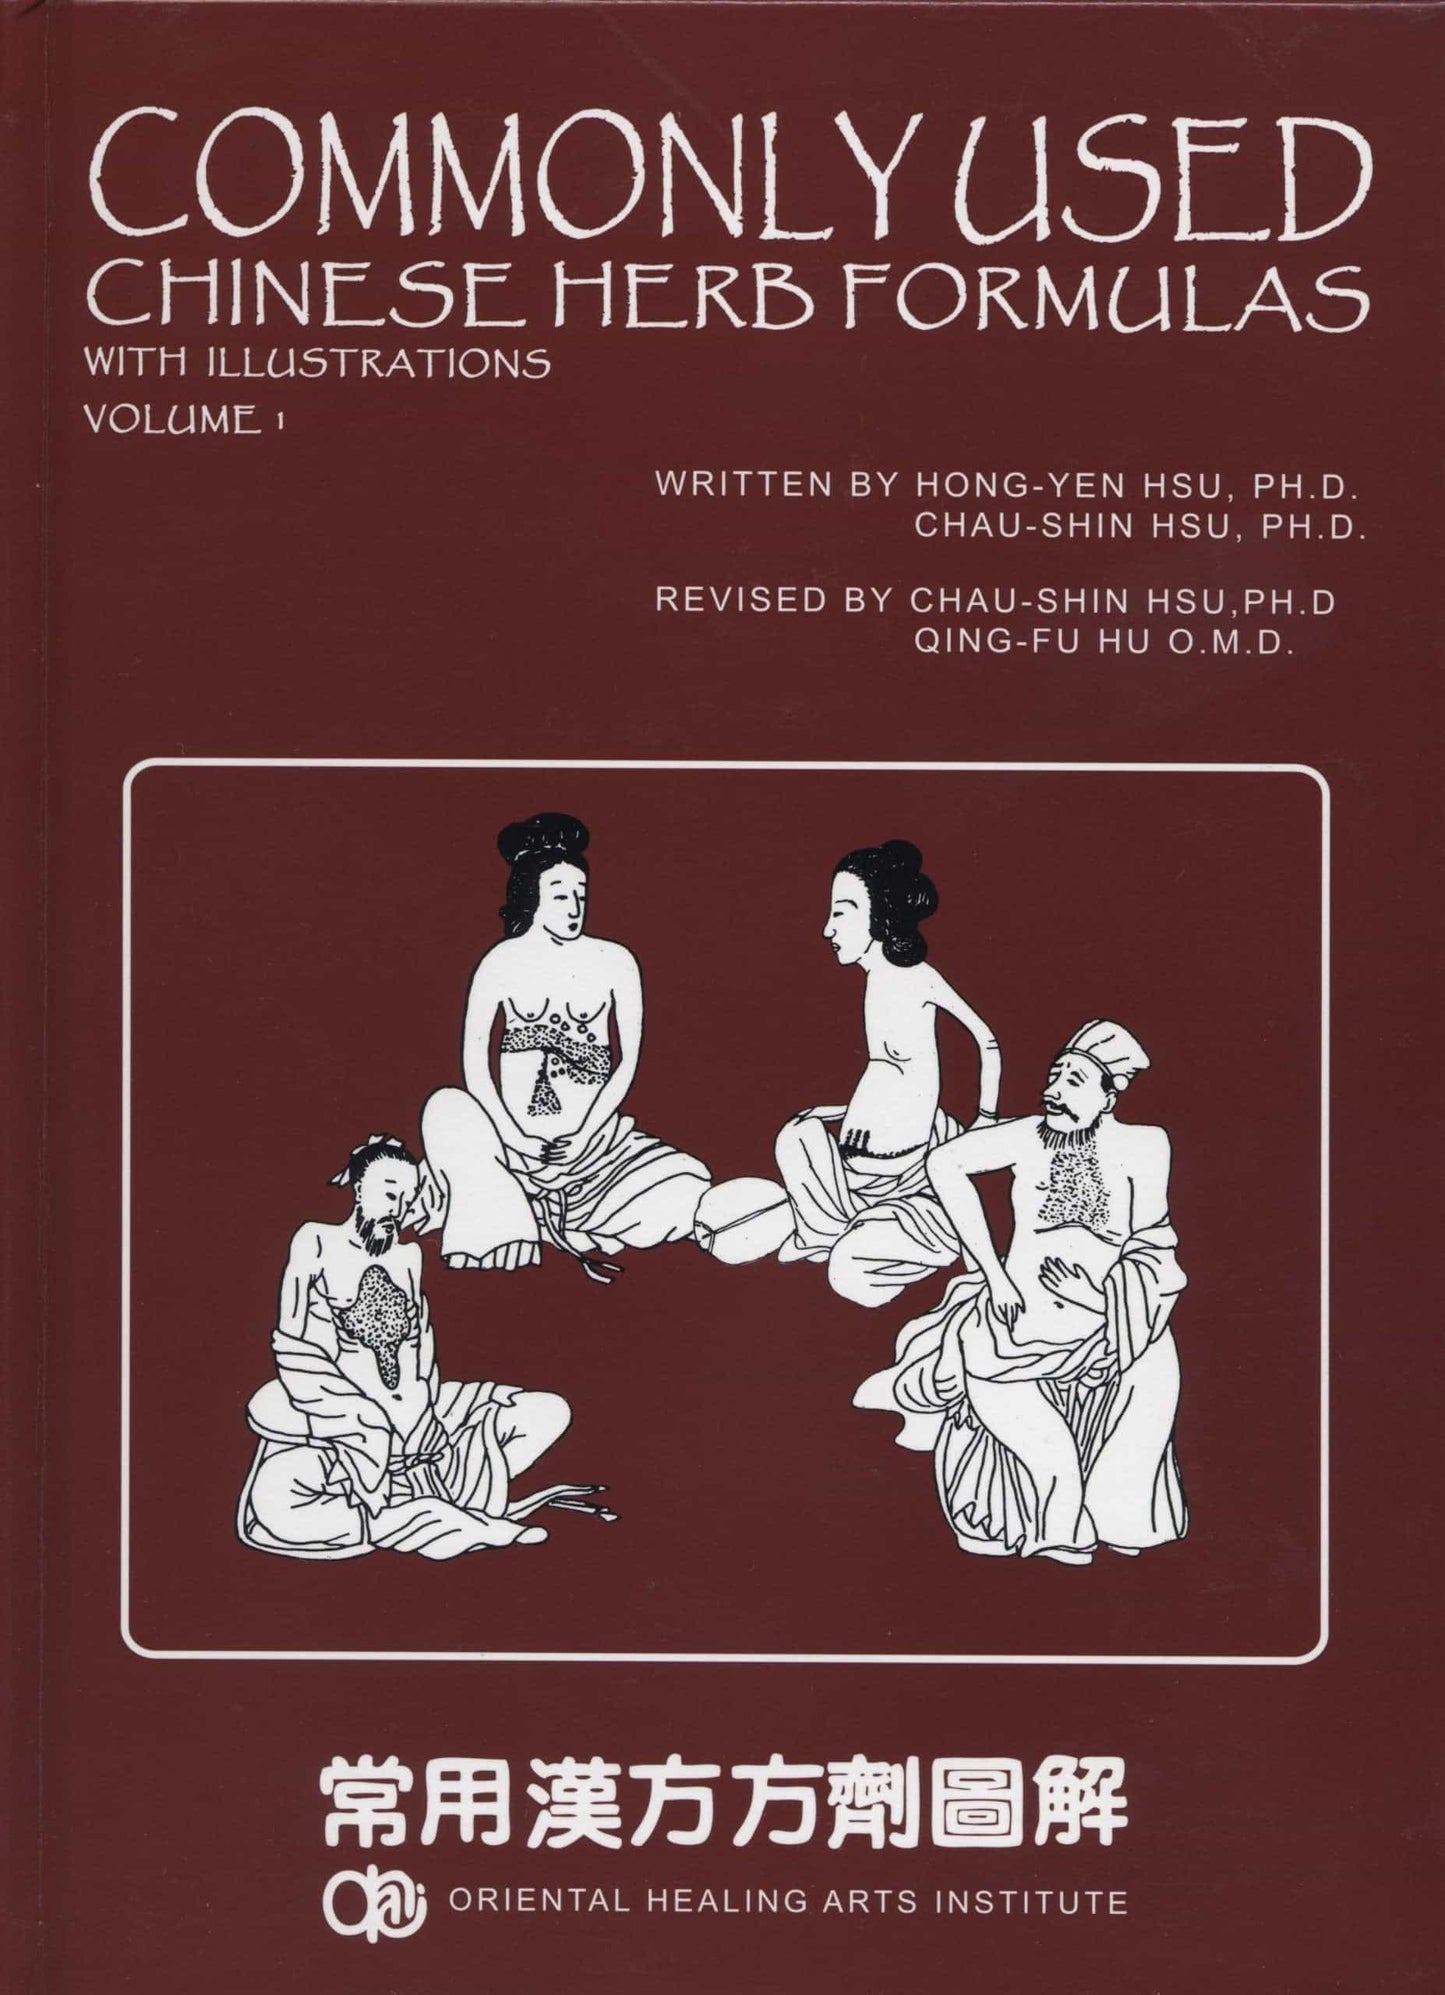 Commonly Used Chinese Herb Formulas - with illustrations (Second Edition Vol. 1) Chau-Shin Hsu PH.D. Hong-Yen Hsu PH.D.